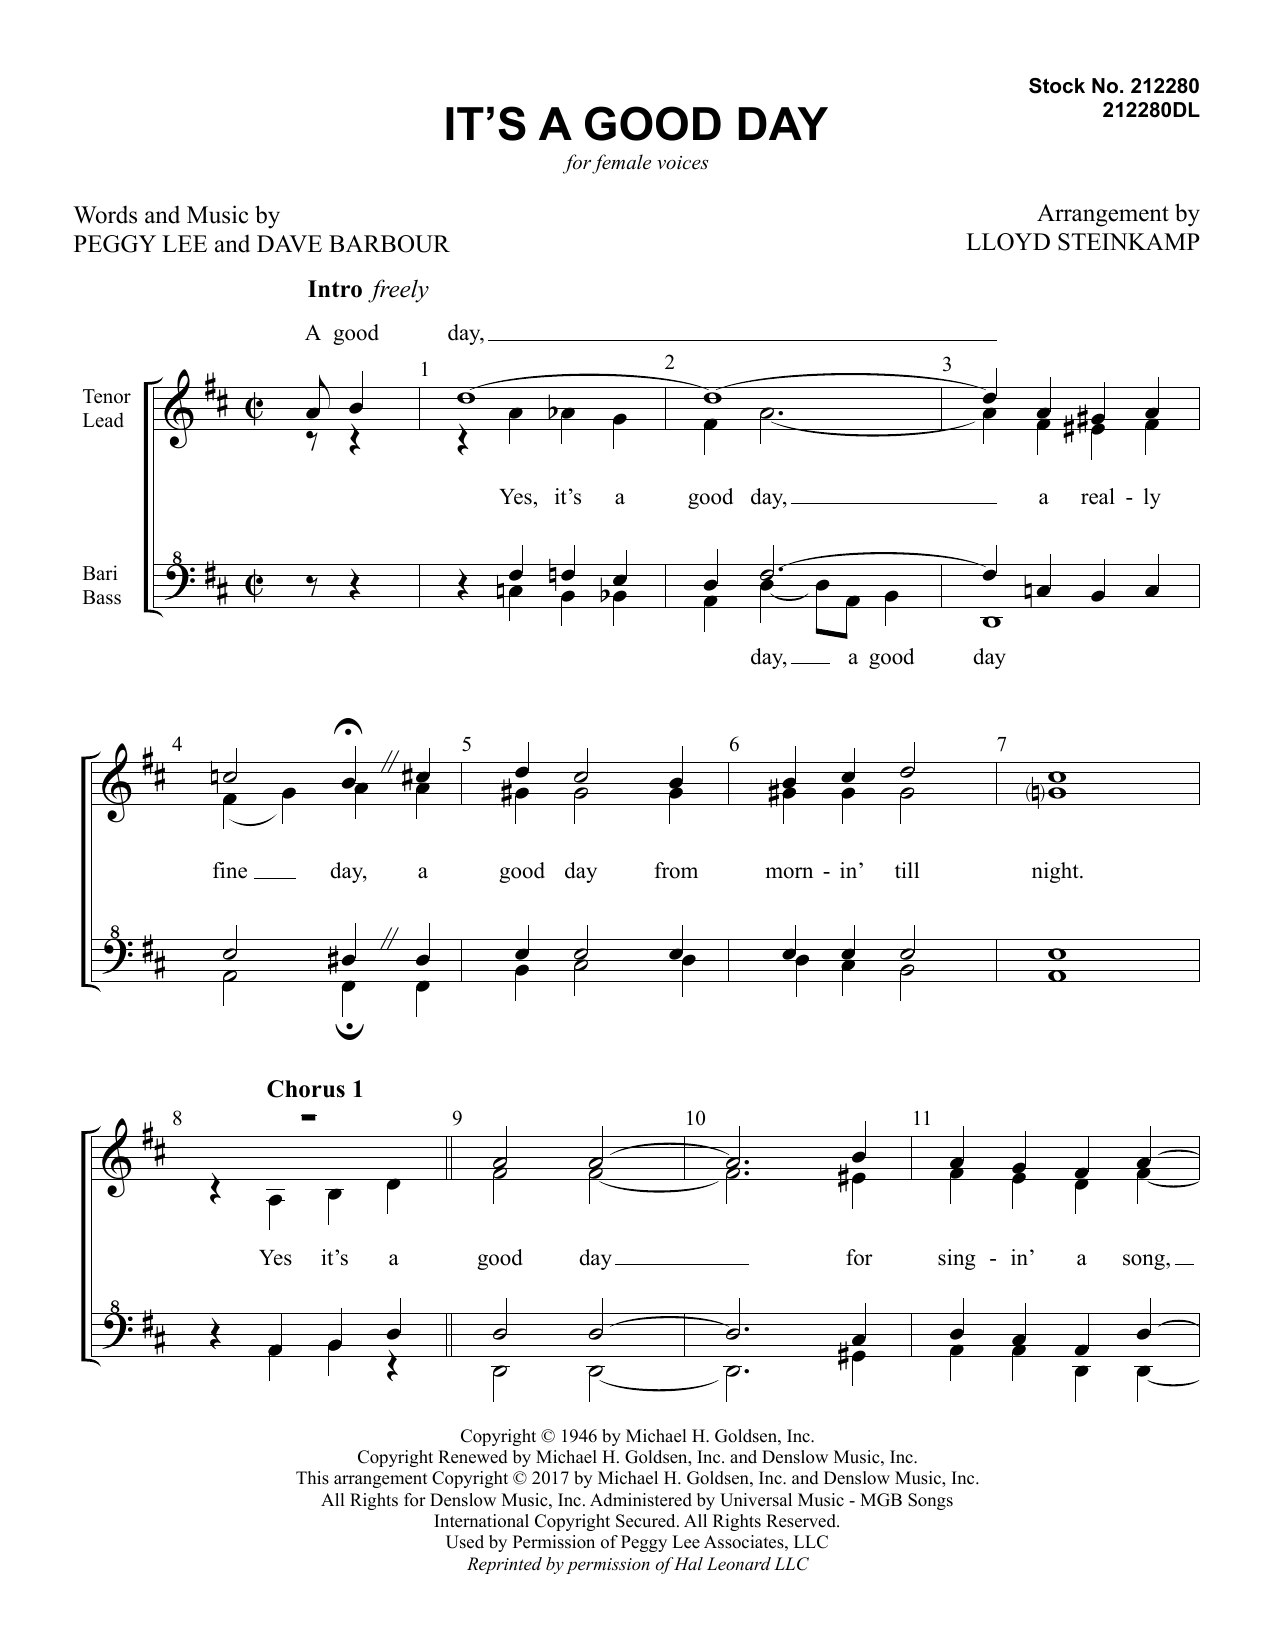 Peggy Lee It's a Good Day (arr. Lloyd Steinkamp) Sheet Music Notes & Chords for TTBB Choir - Download or Print PDF